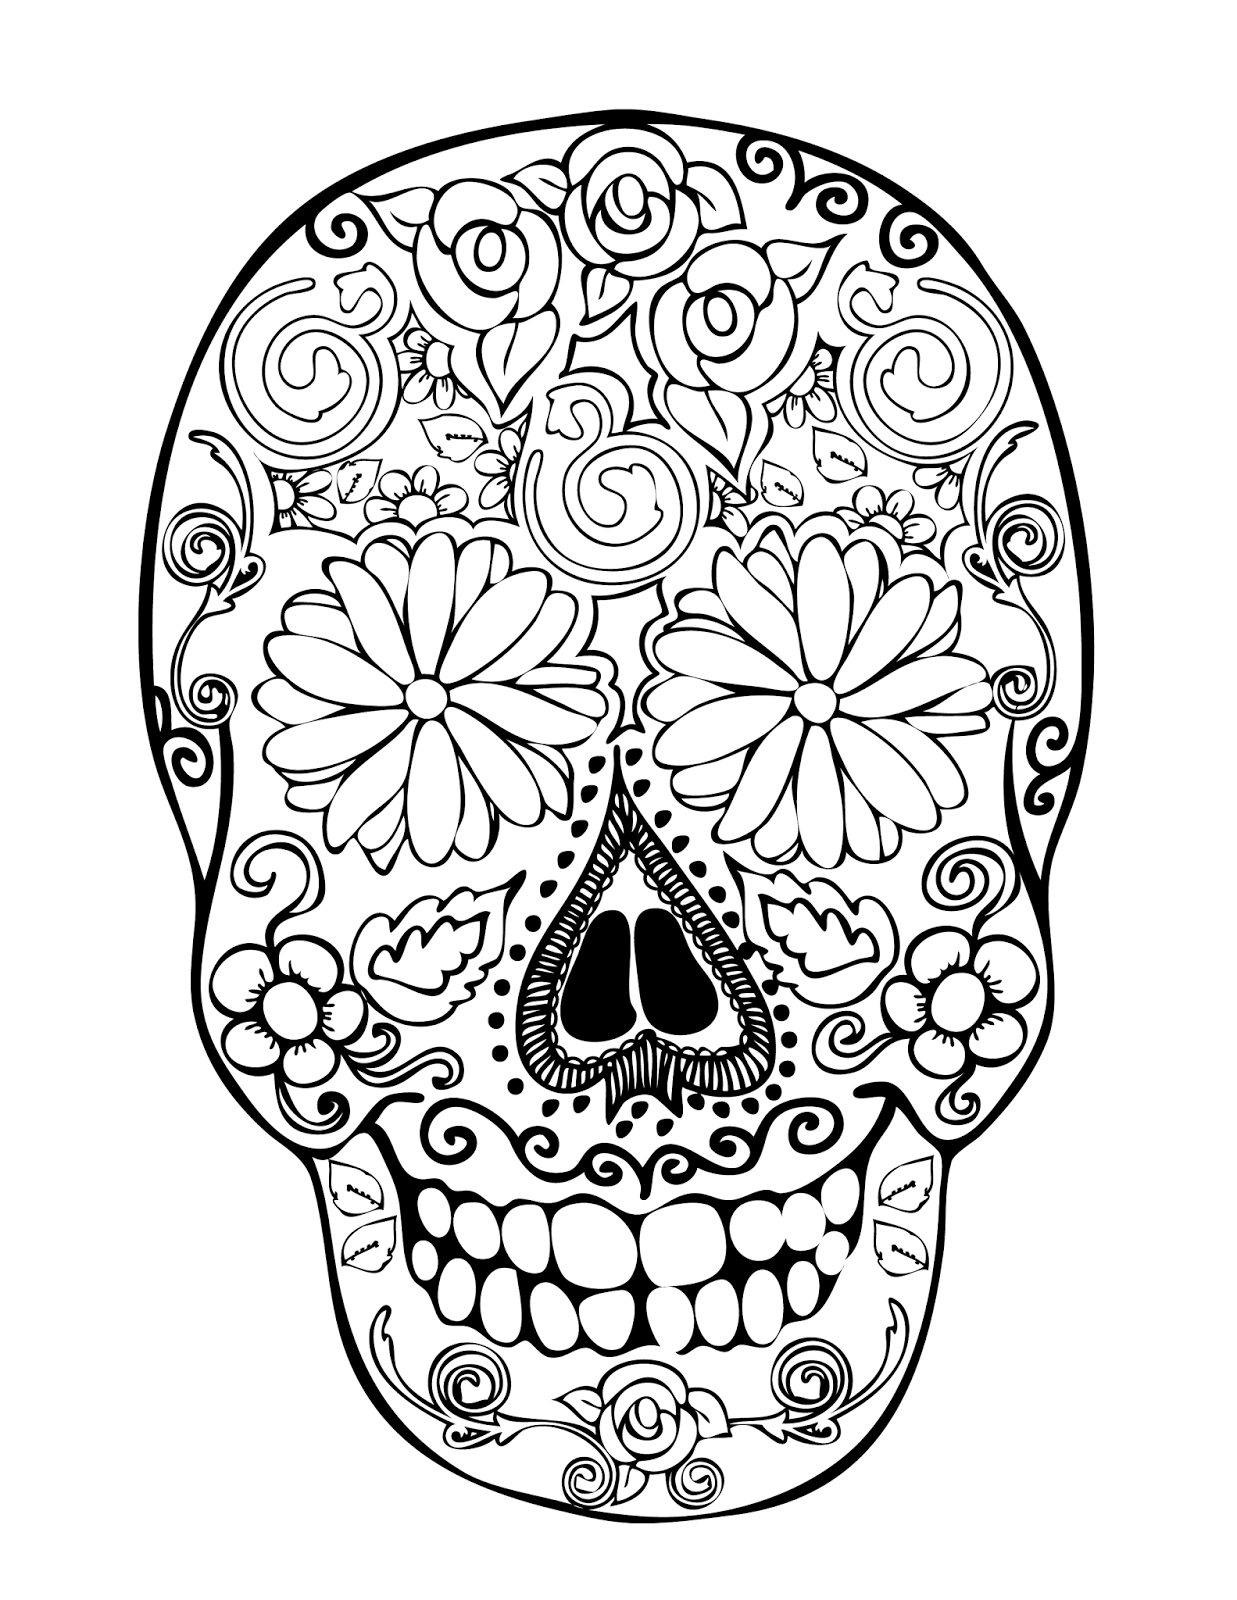 Images For > Sugar Skull Clip Art